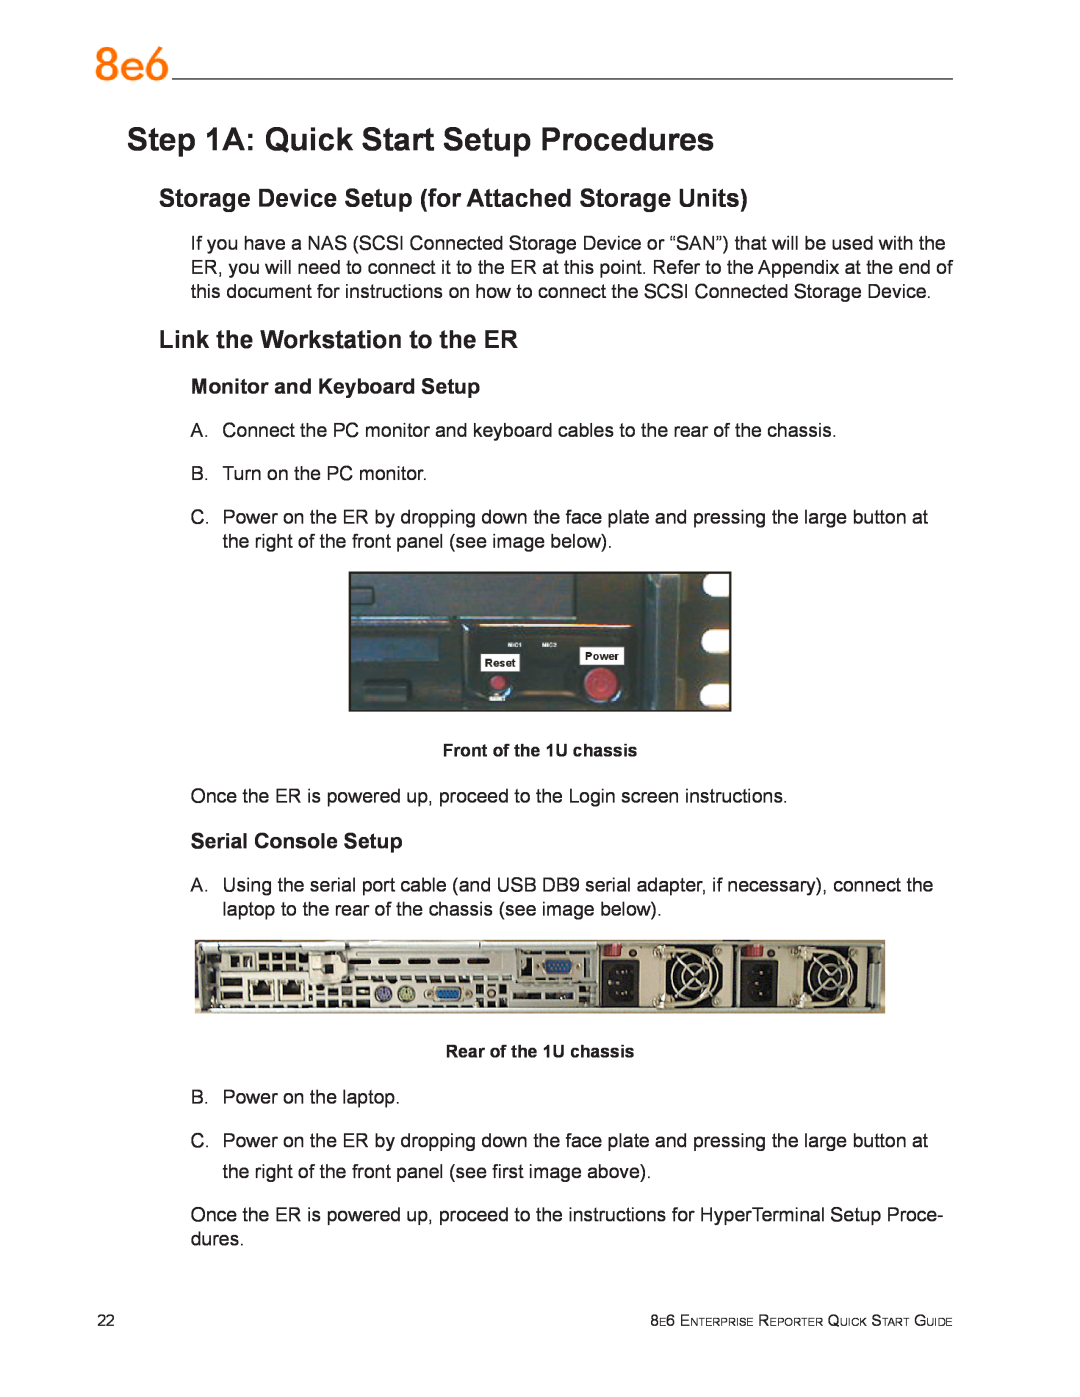 8e6 Technologies ERH-100 (5K02-61) A Quick Start Setup Procedures, Storage Device Setup for Attached Storage Units 